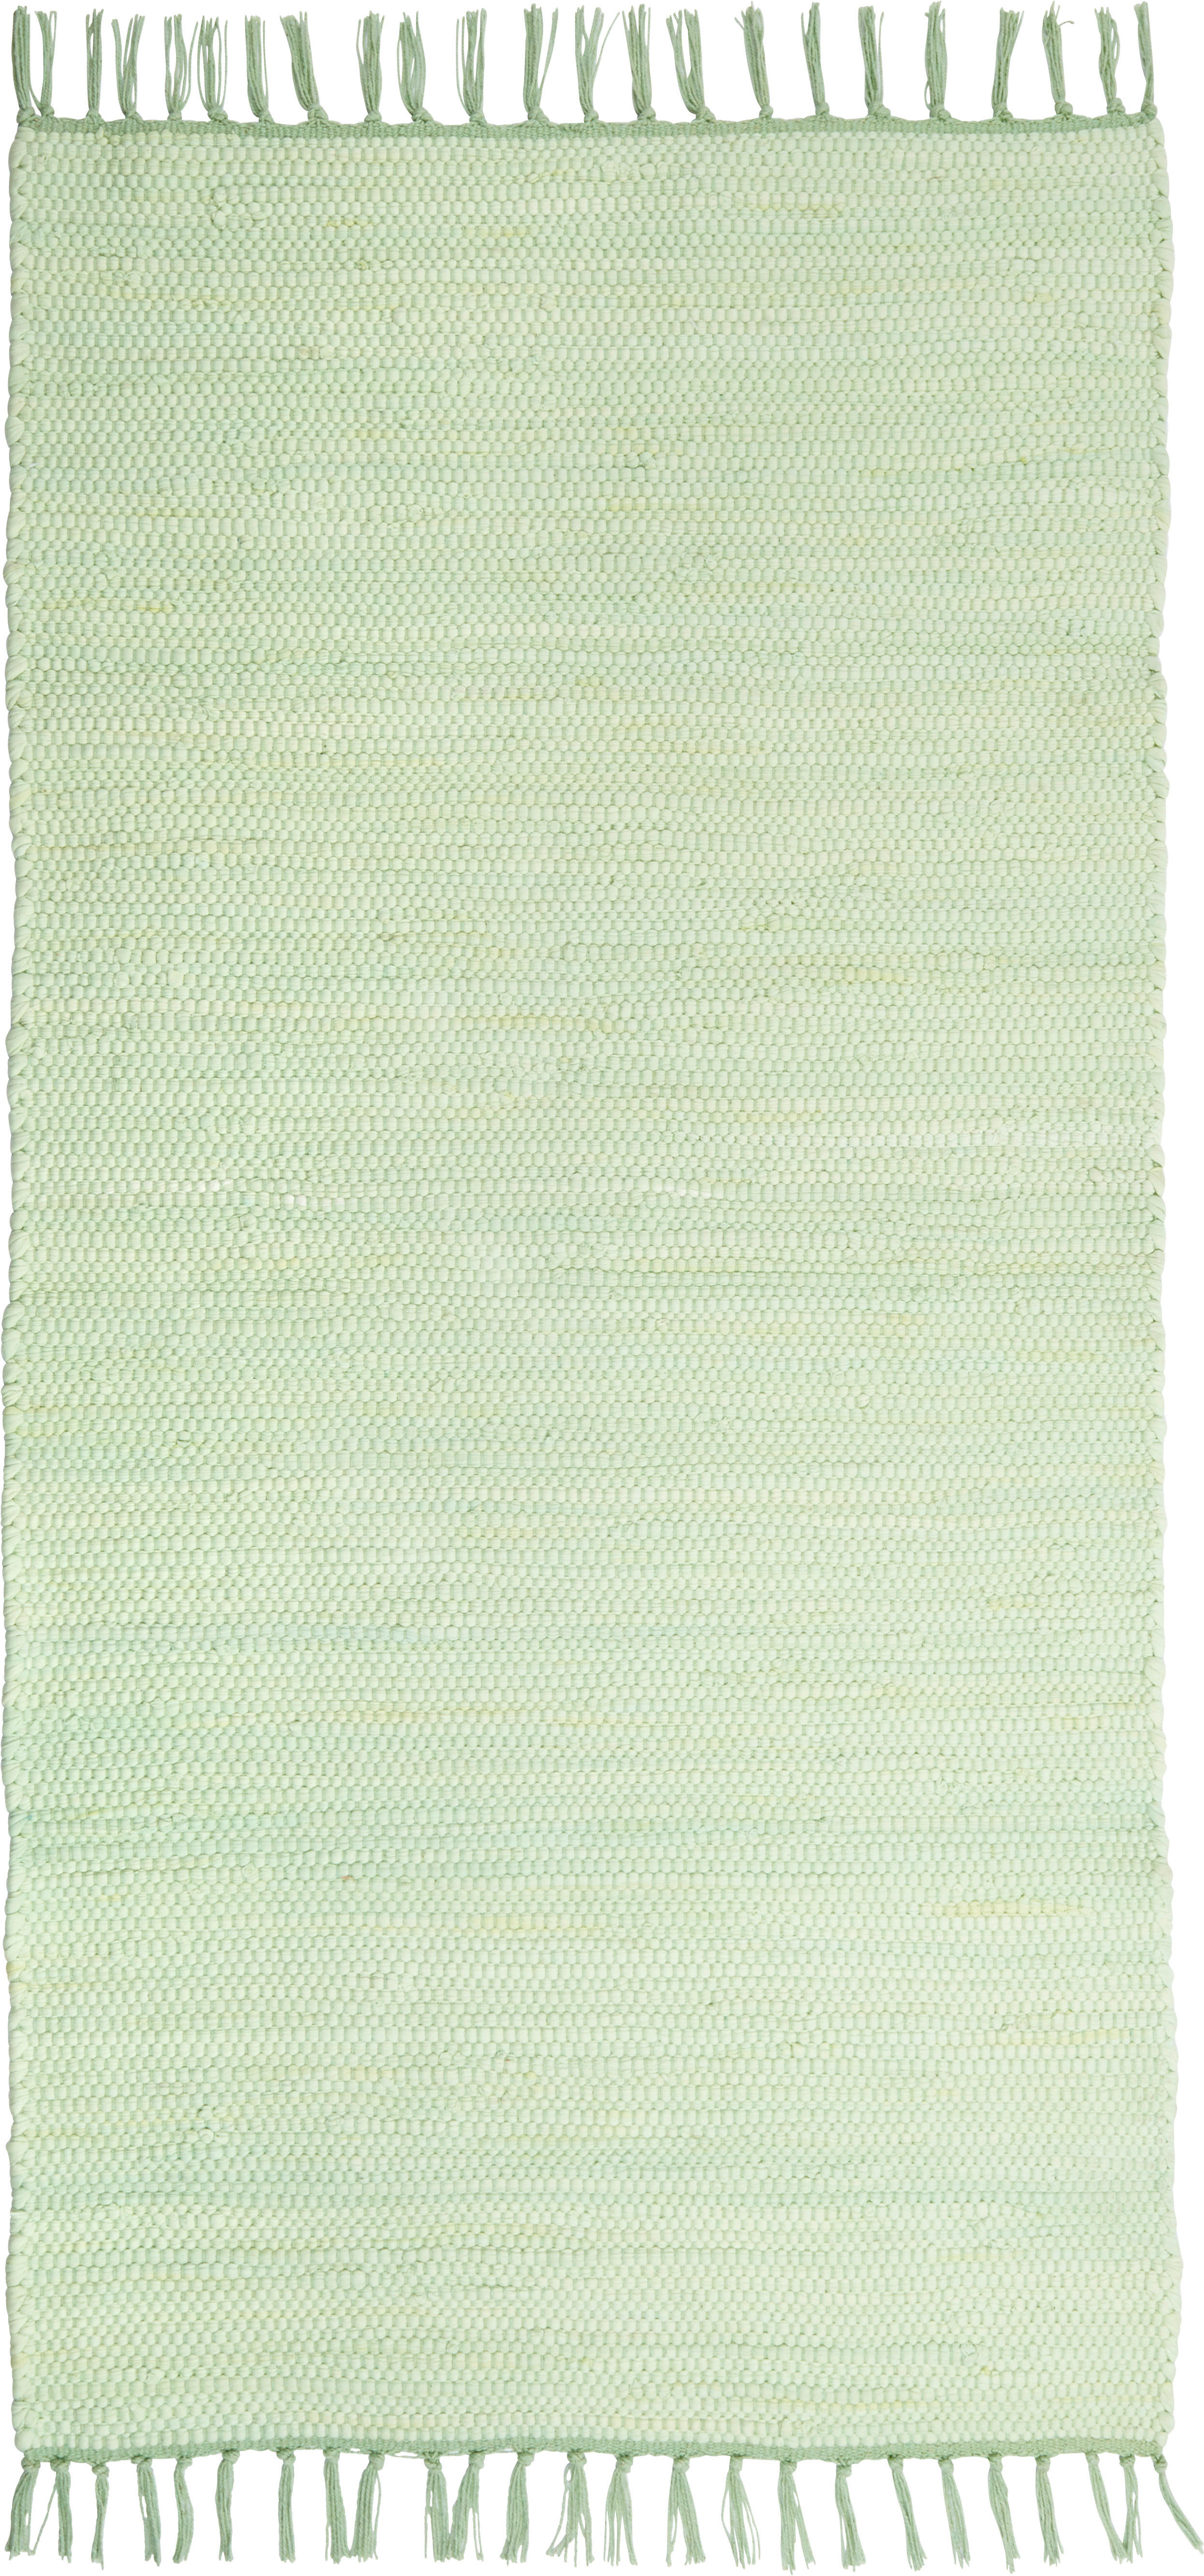 PROSTIRKA  mintzelena     - mintzelena, Lajfstajl, tekstil (60/120cm) - Boxxx